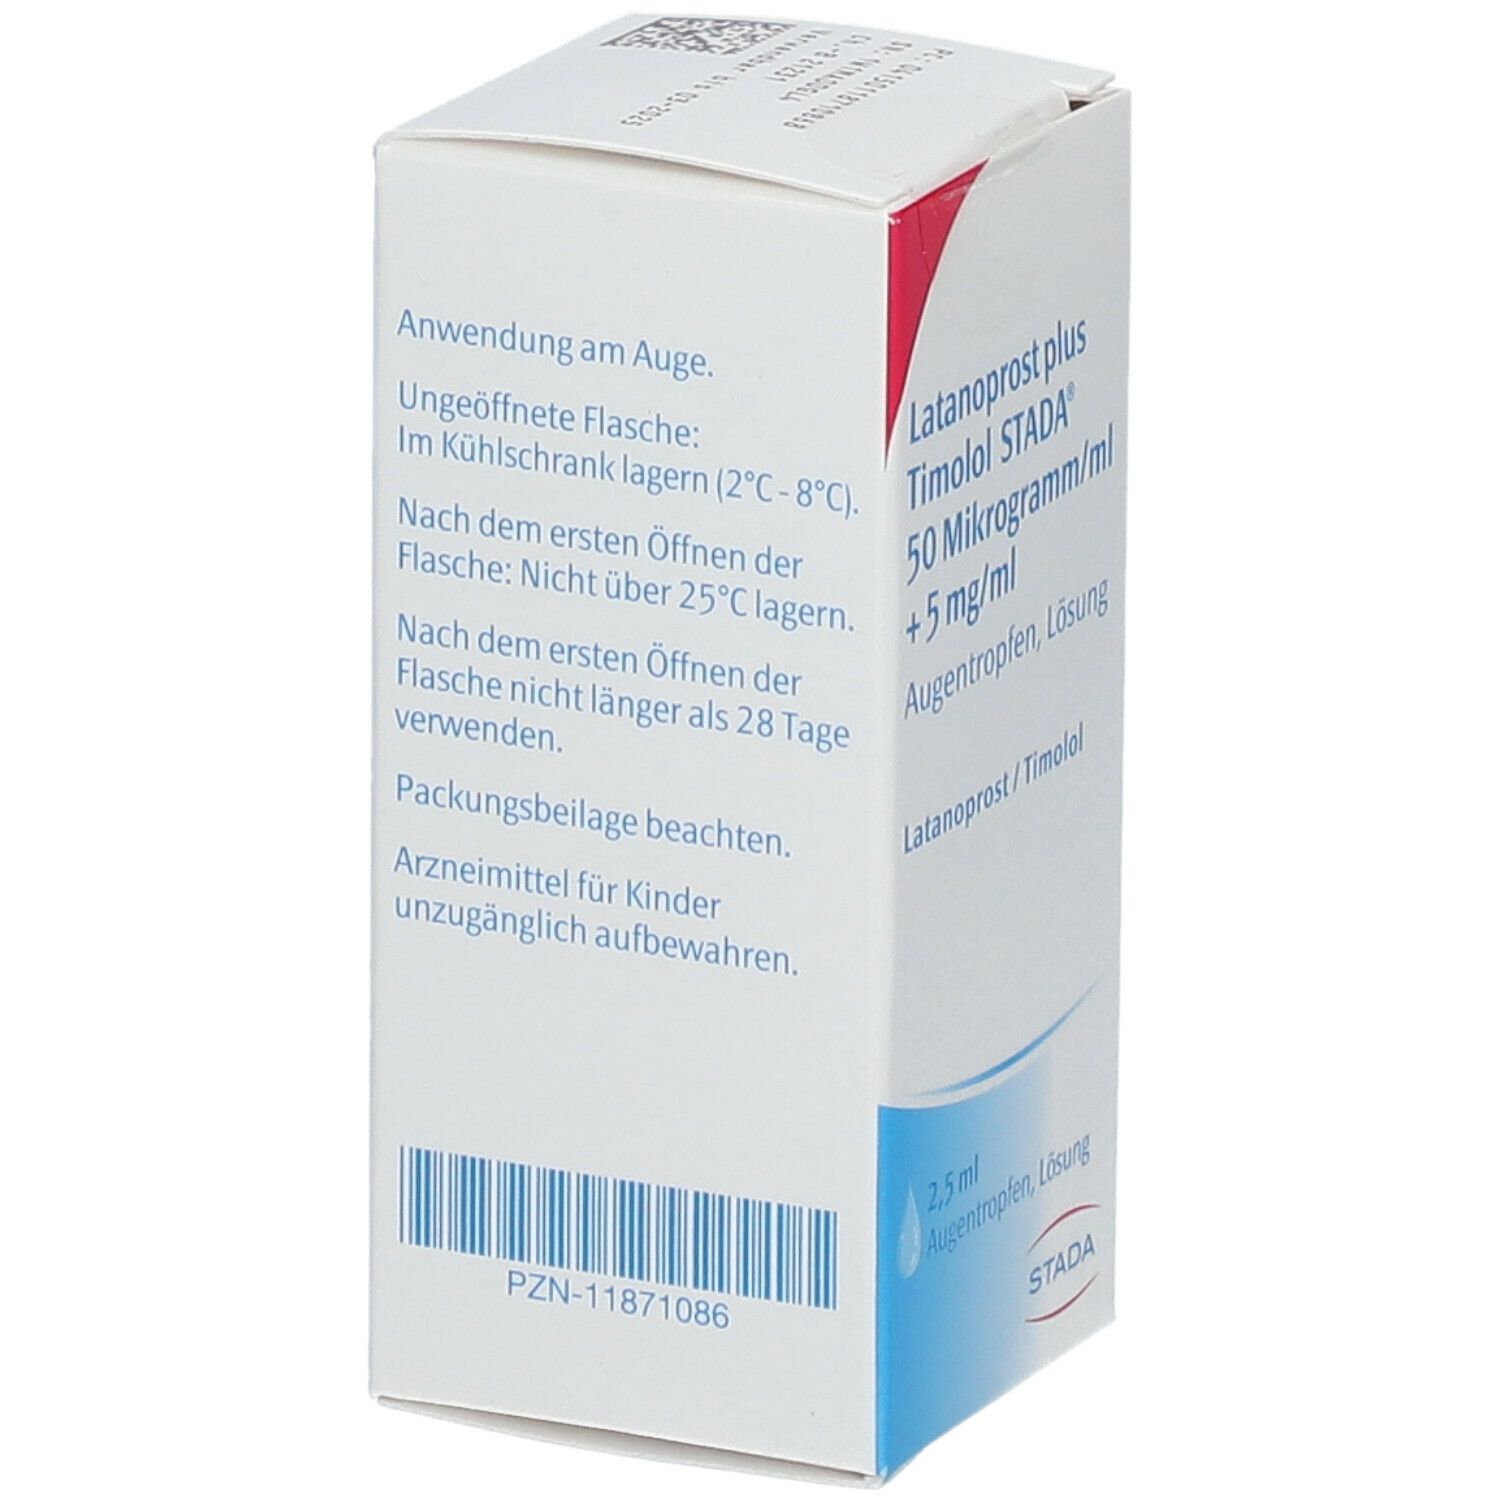 Latanoprost plus Timolol STADA® 50 µg/ml + 5 mg/ml Augentropfen, Lösung